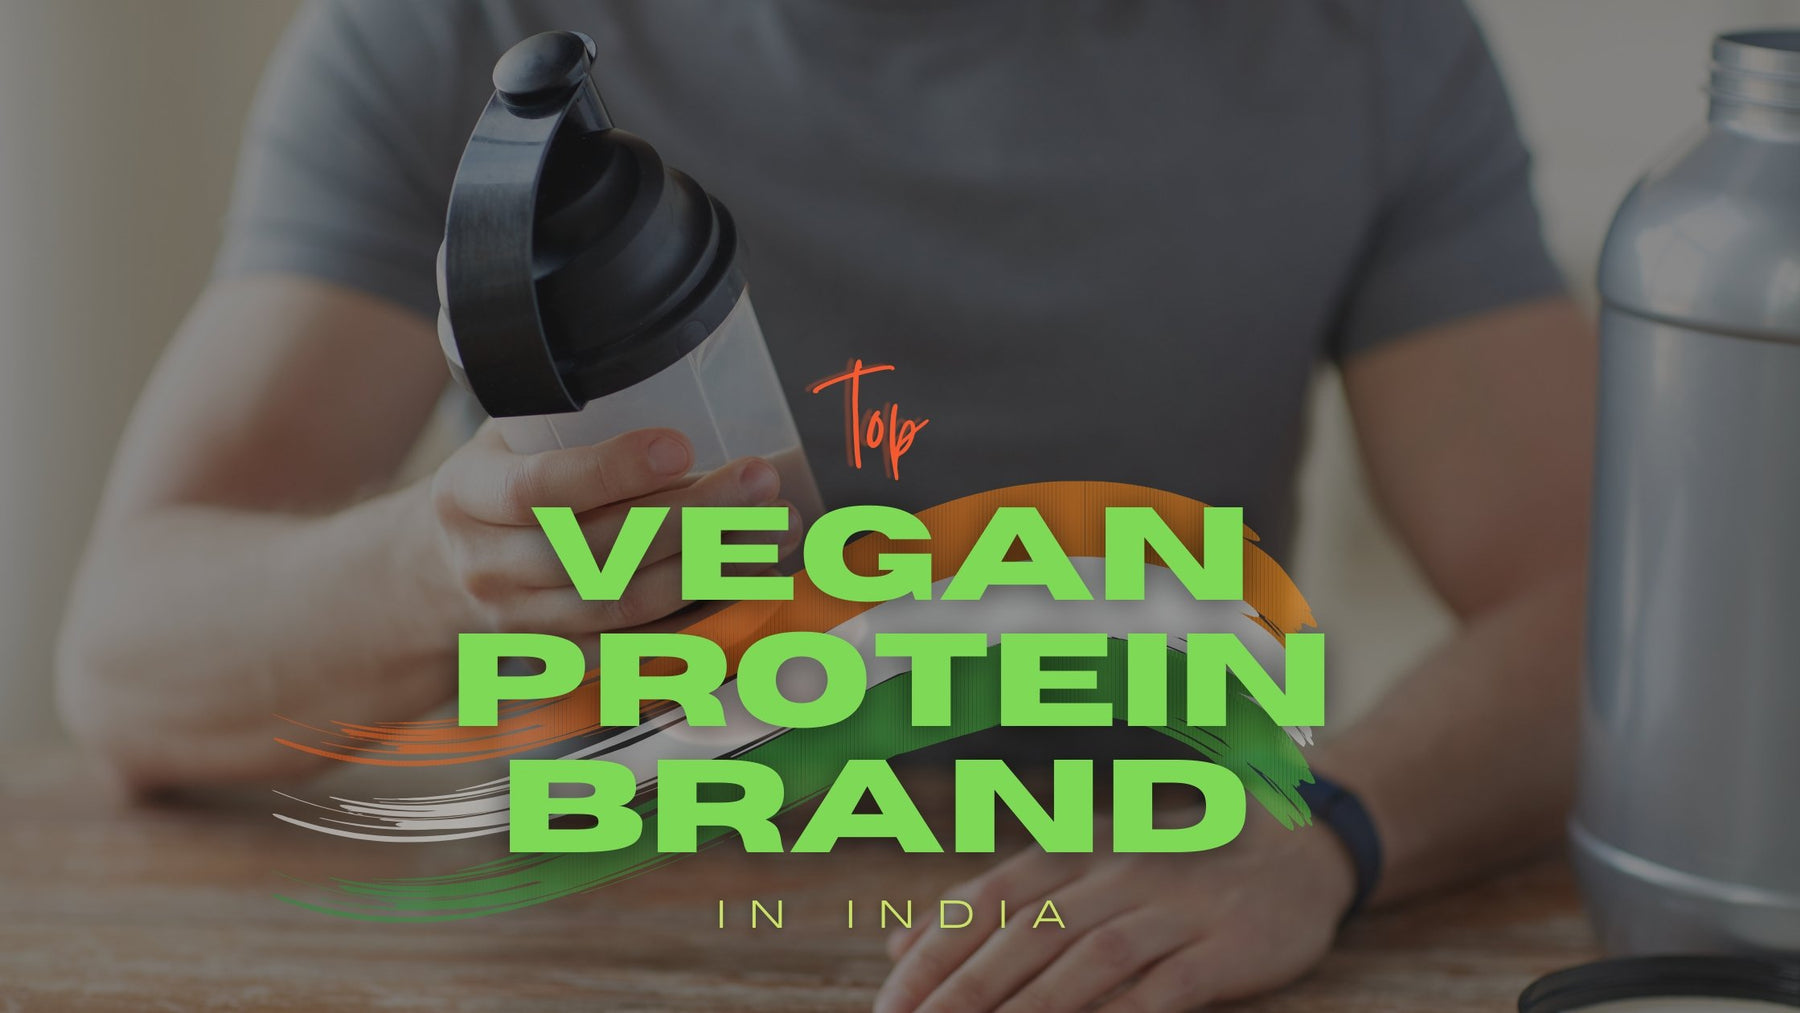 36 Vegan Protein Brands That Are Available in India | Roshni Sanghvi